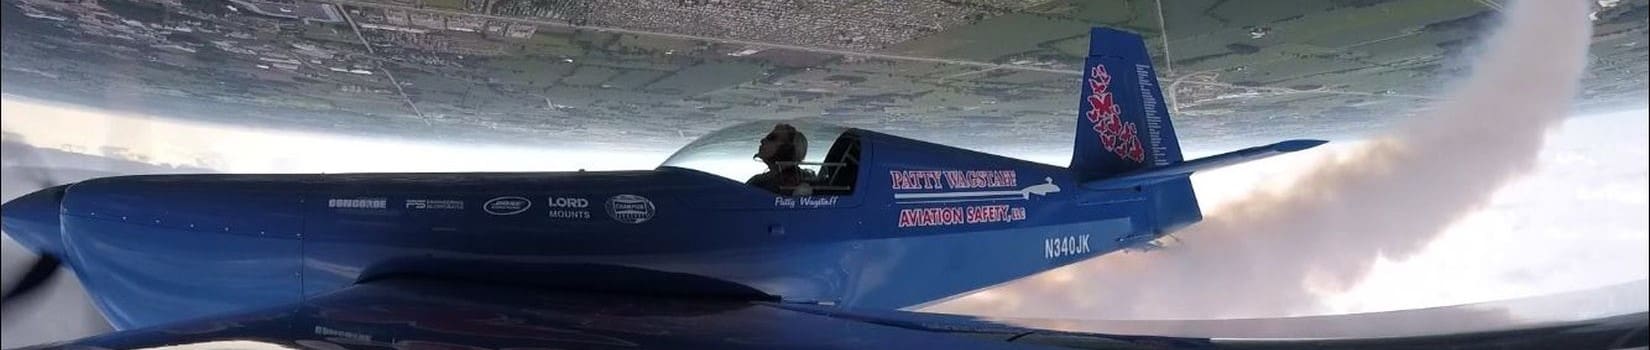 Patty Wagstaff Aviation Safety, LLC